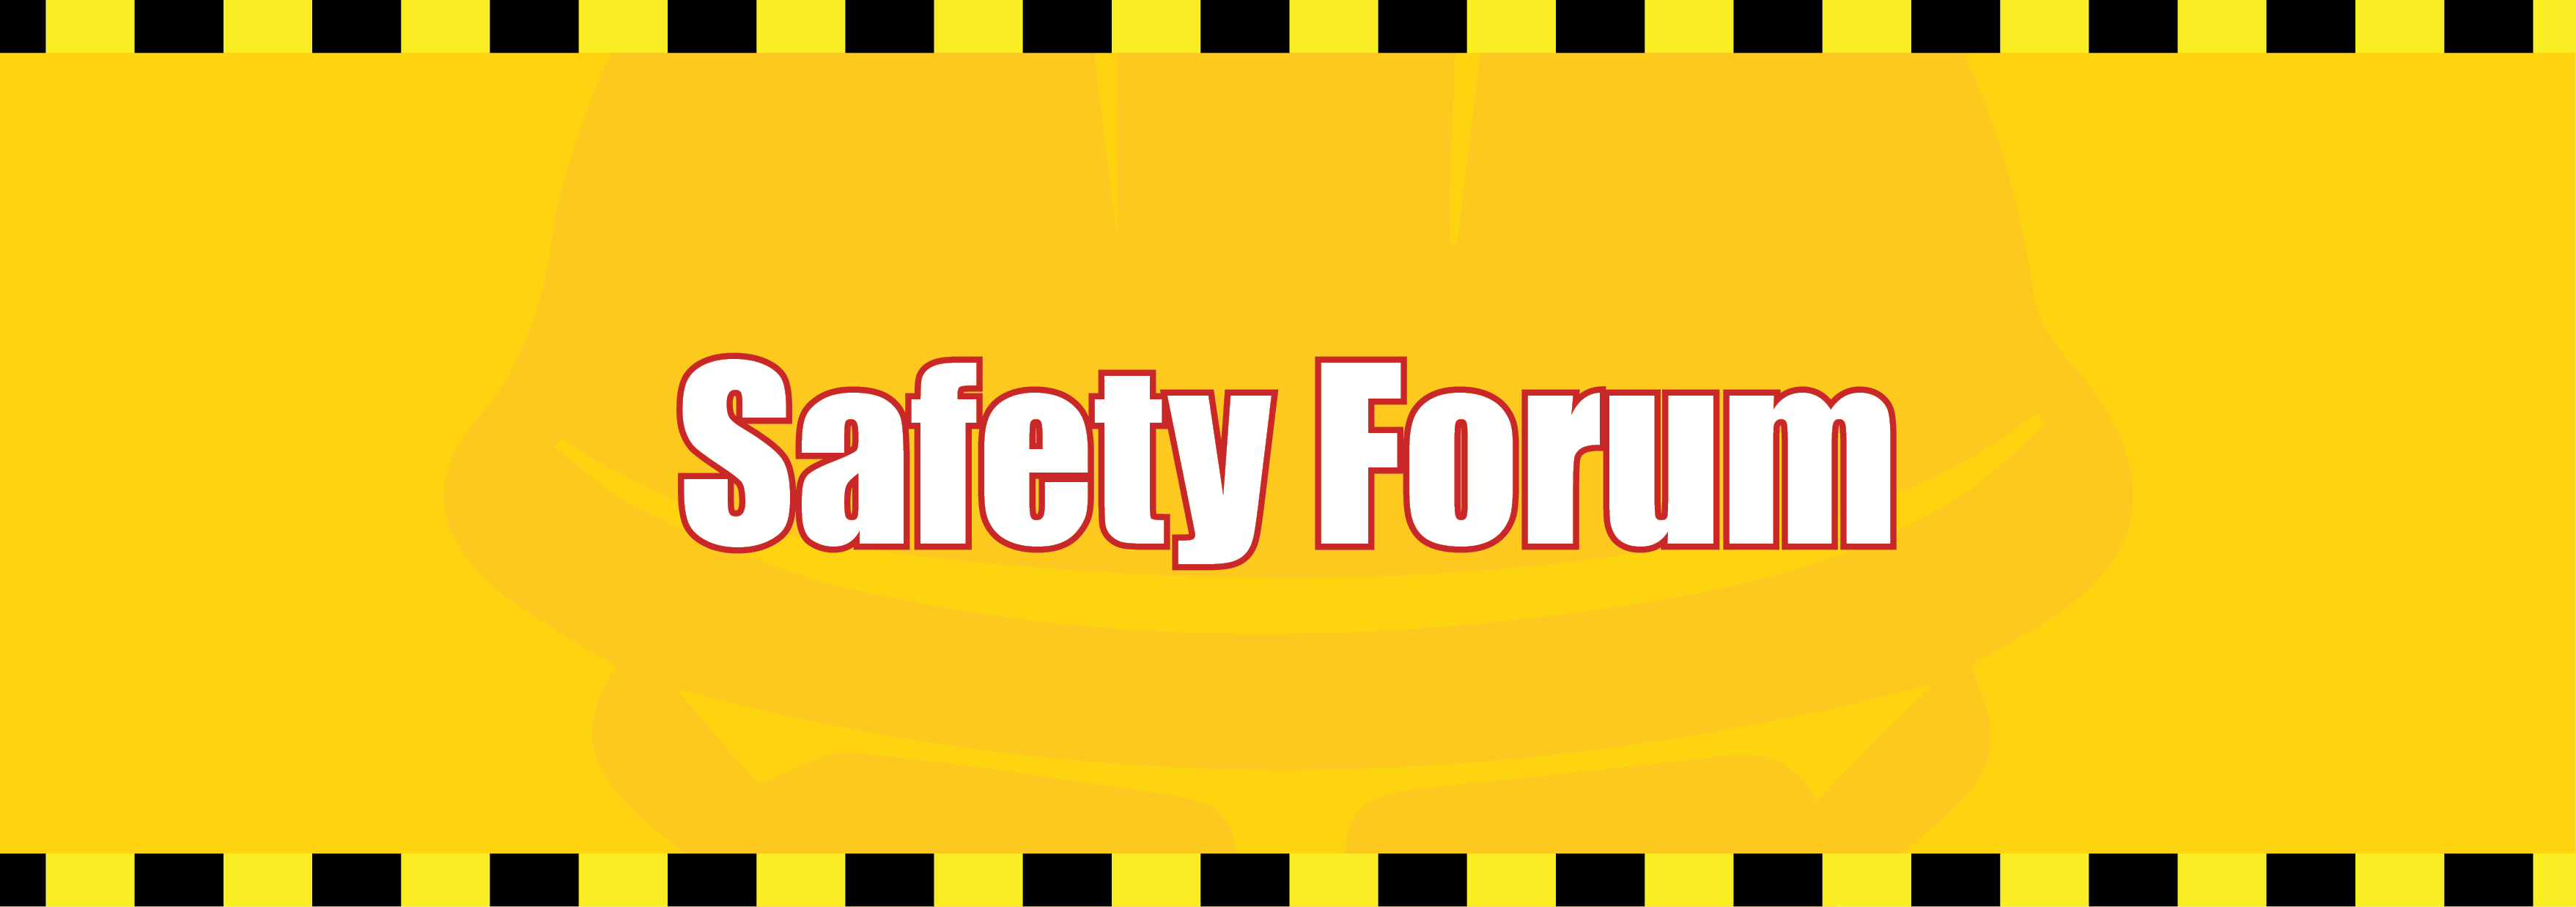 Monthly Safety Forum - 2025 Scheduling